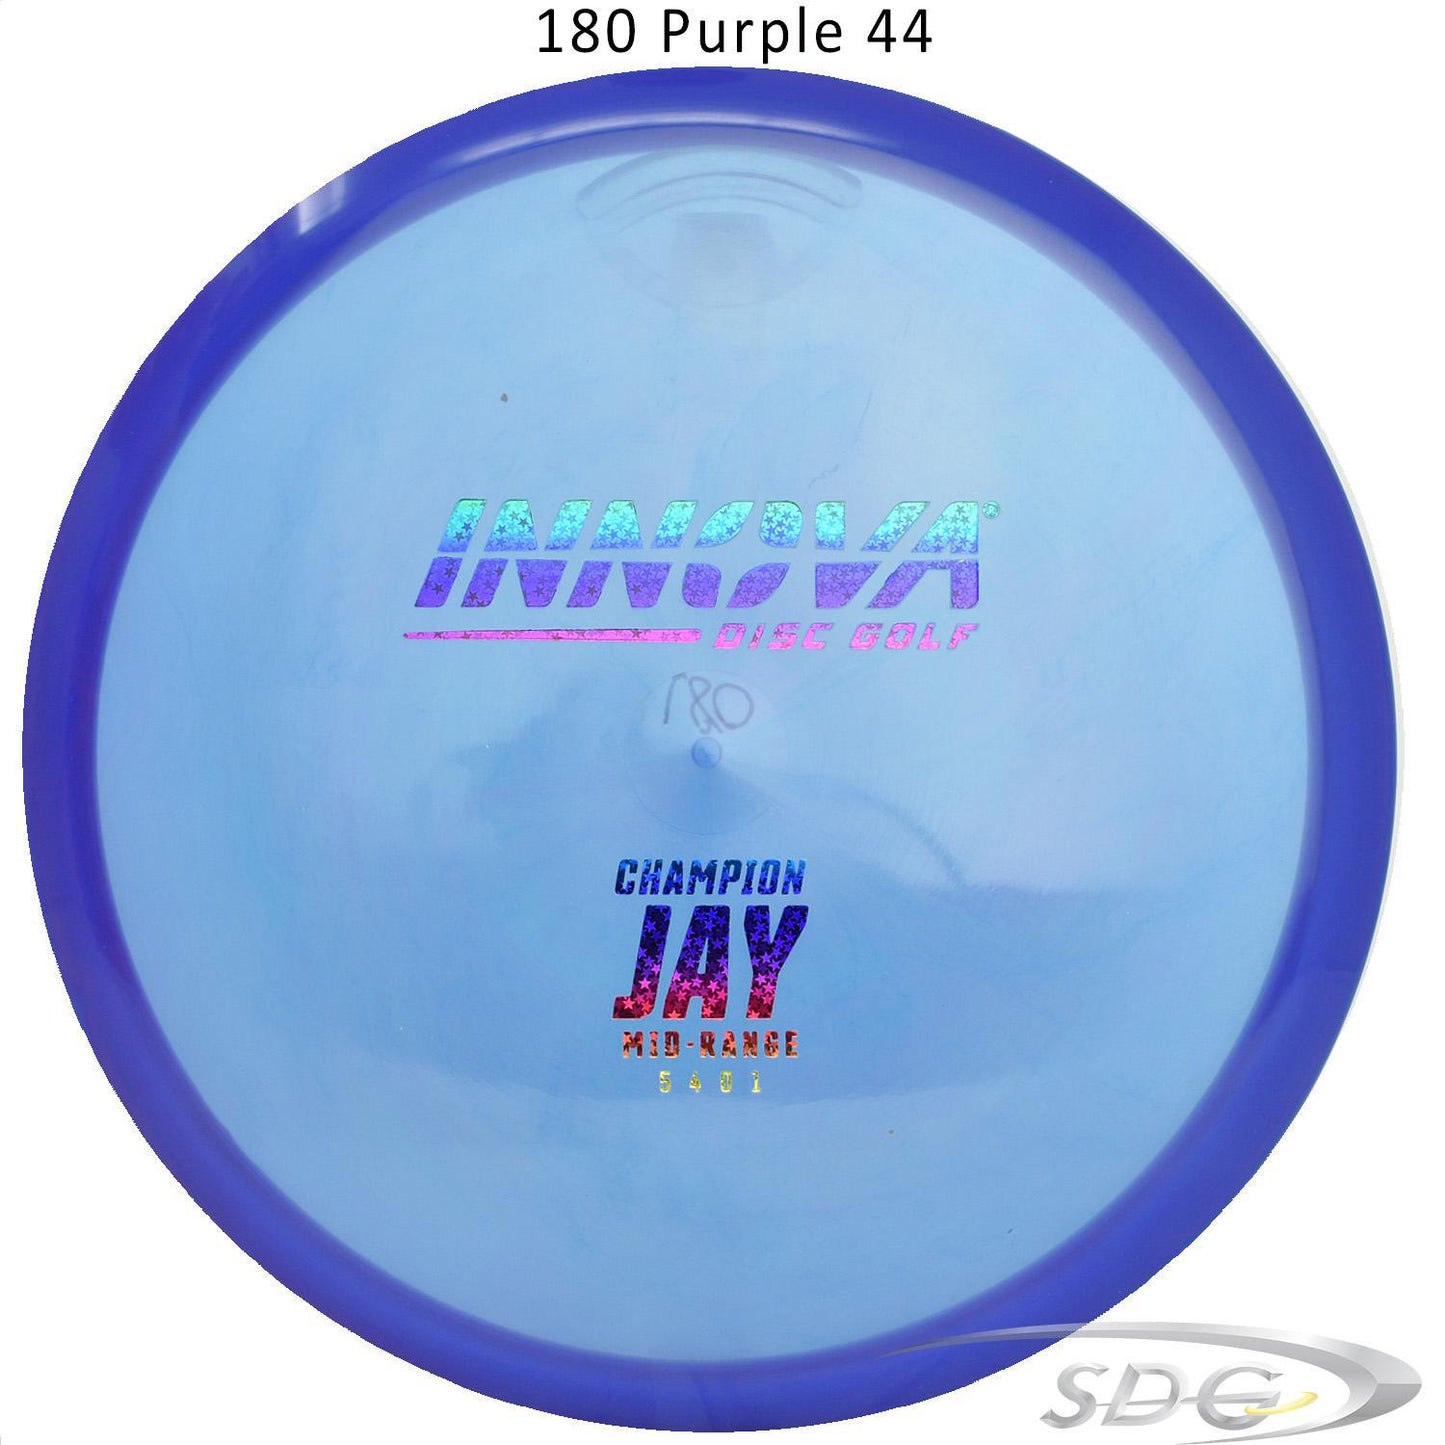 innova-champion-jay-disc-golf-mid-range 180 Purple 44 